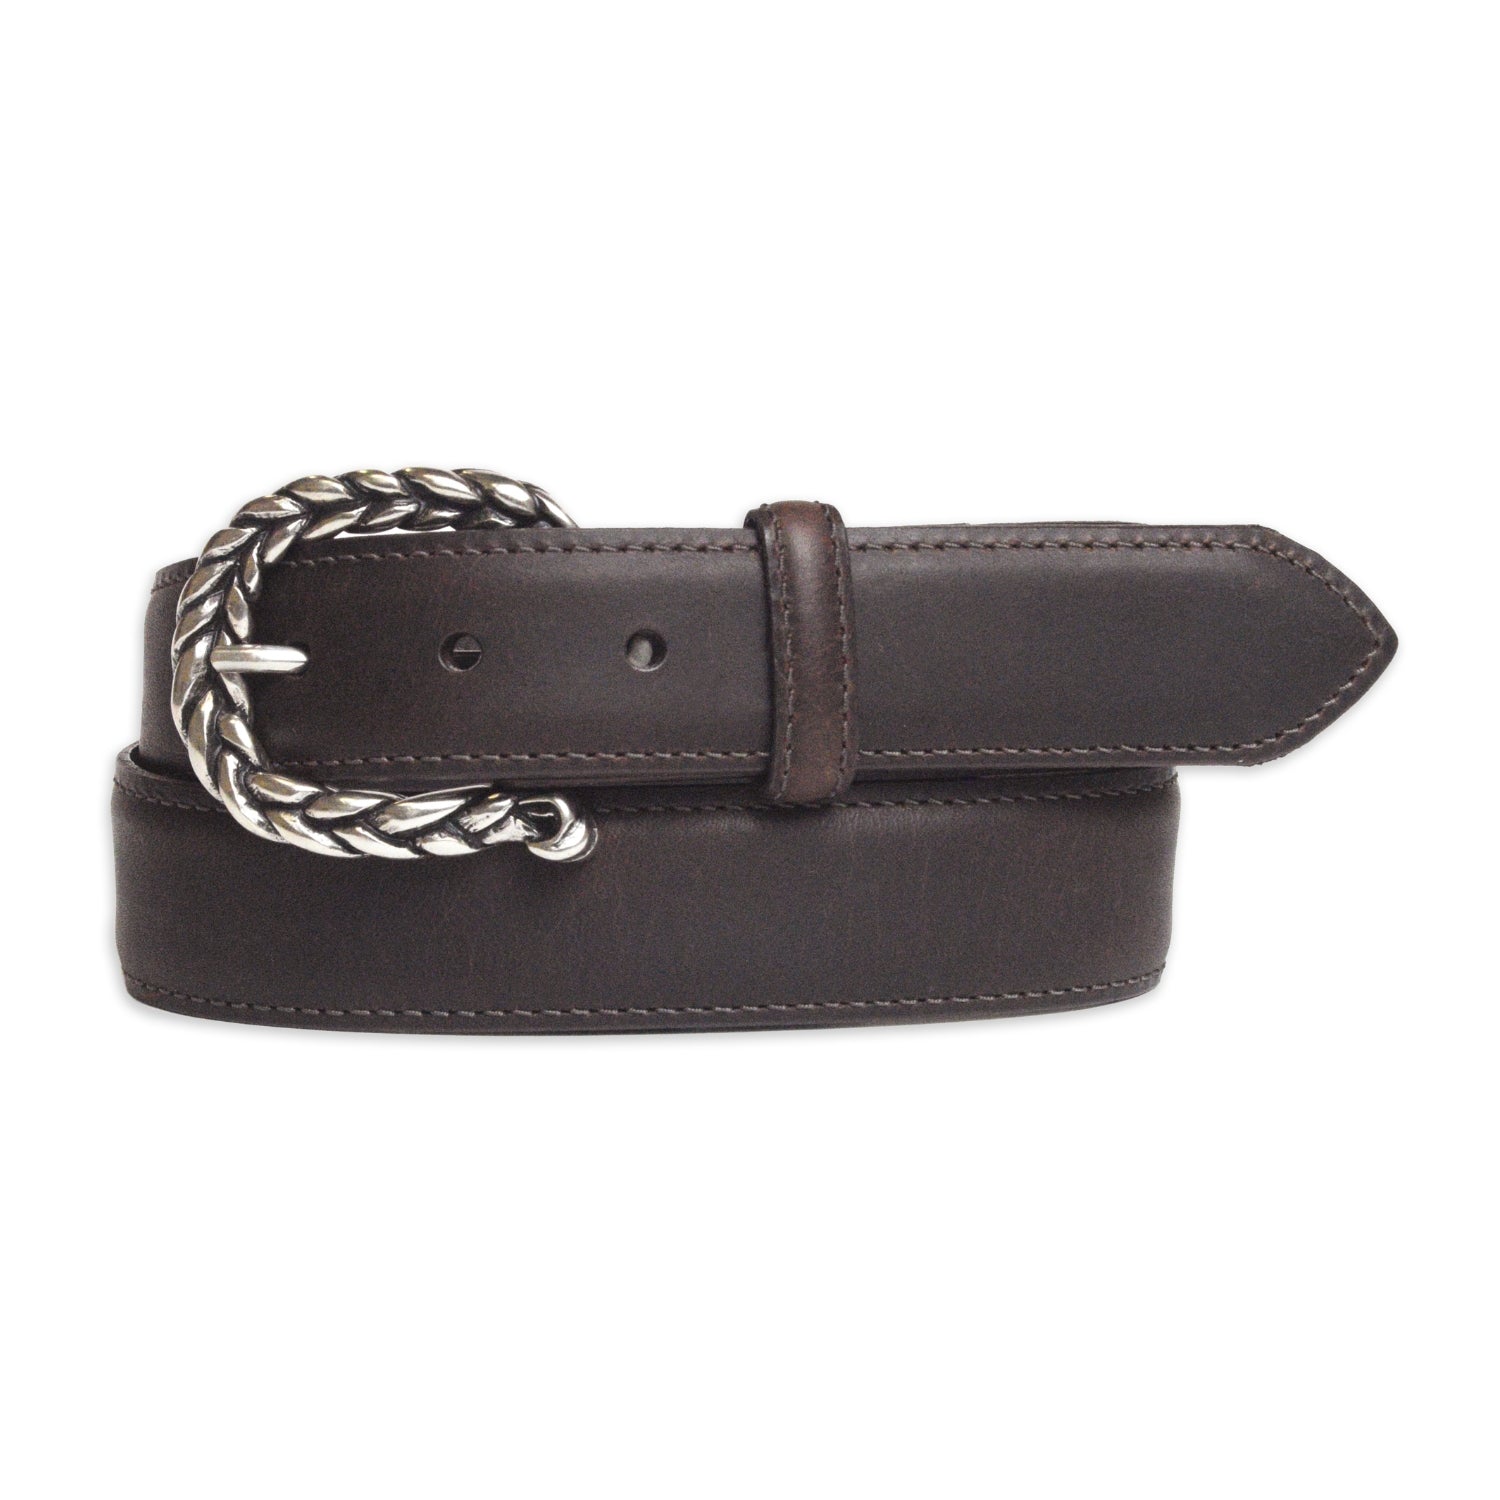 Women's brown leather belt